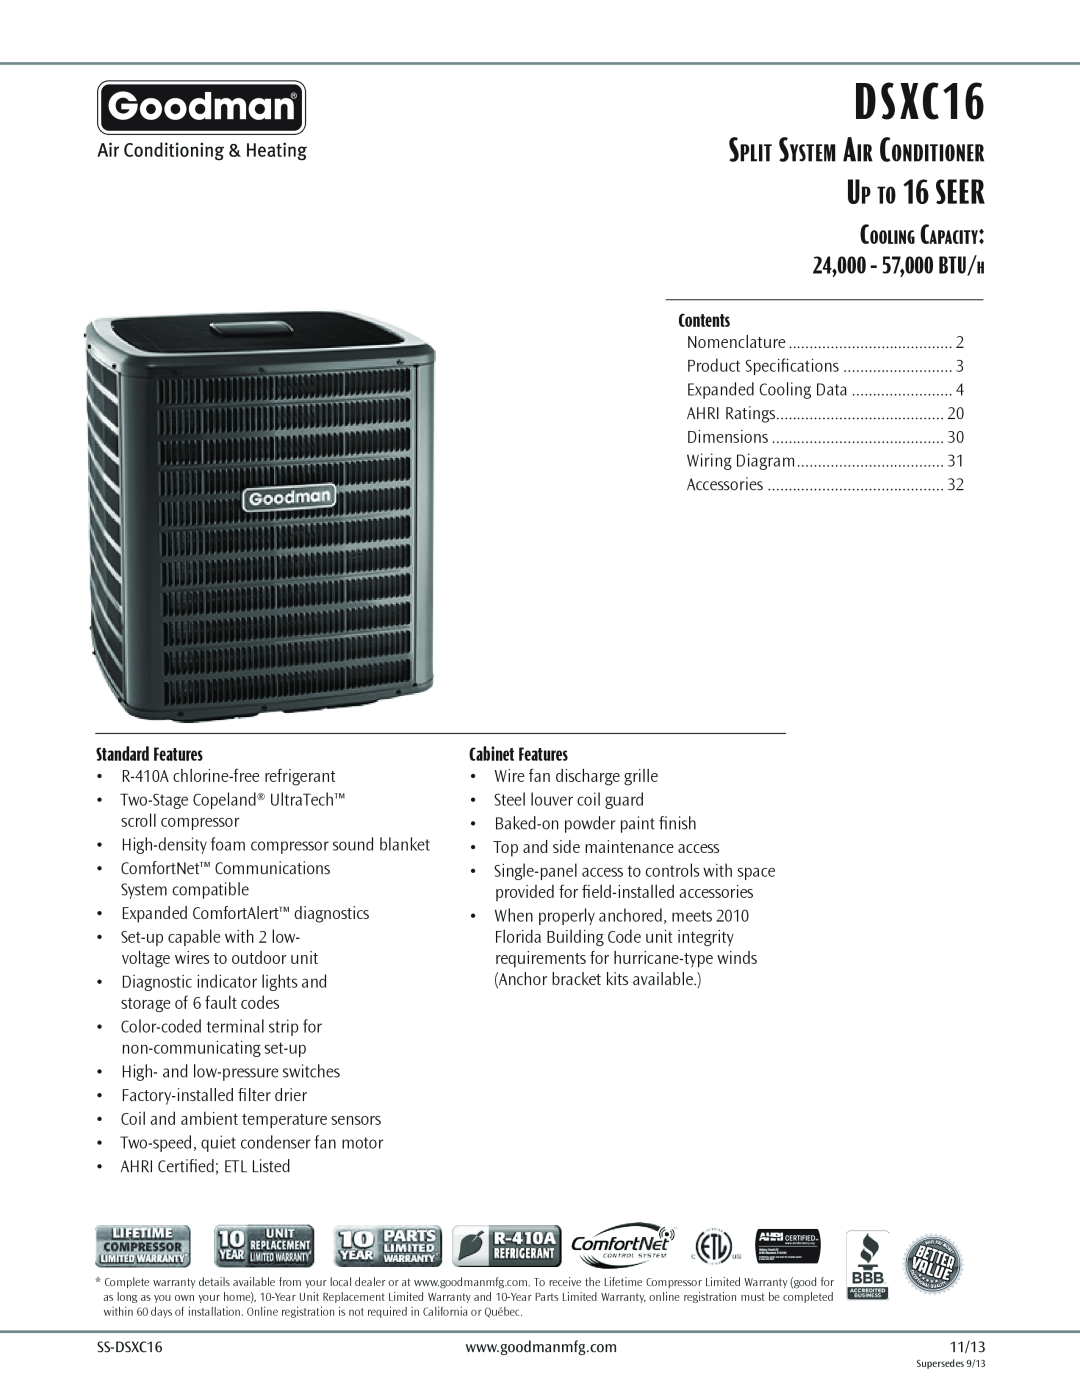 Goodman Mfg DSXC16 dimensions Split System Air Conditioner, 24,000 - 57,000 BTU/h, Contents, Standard Features 